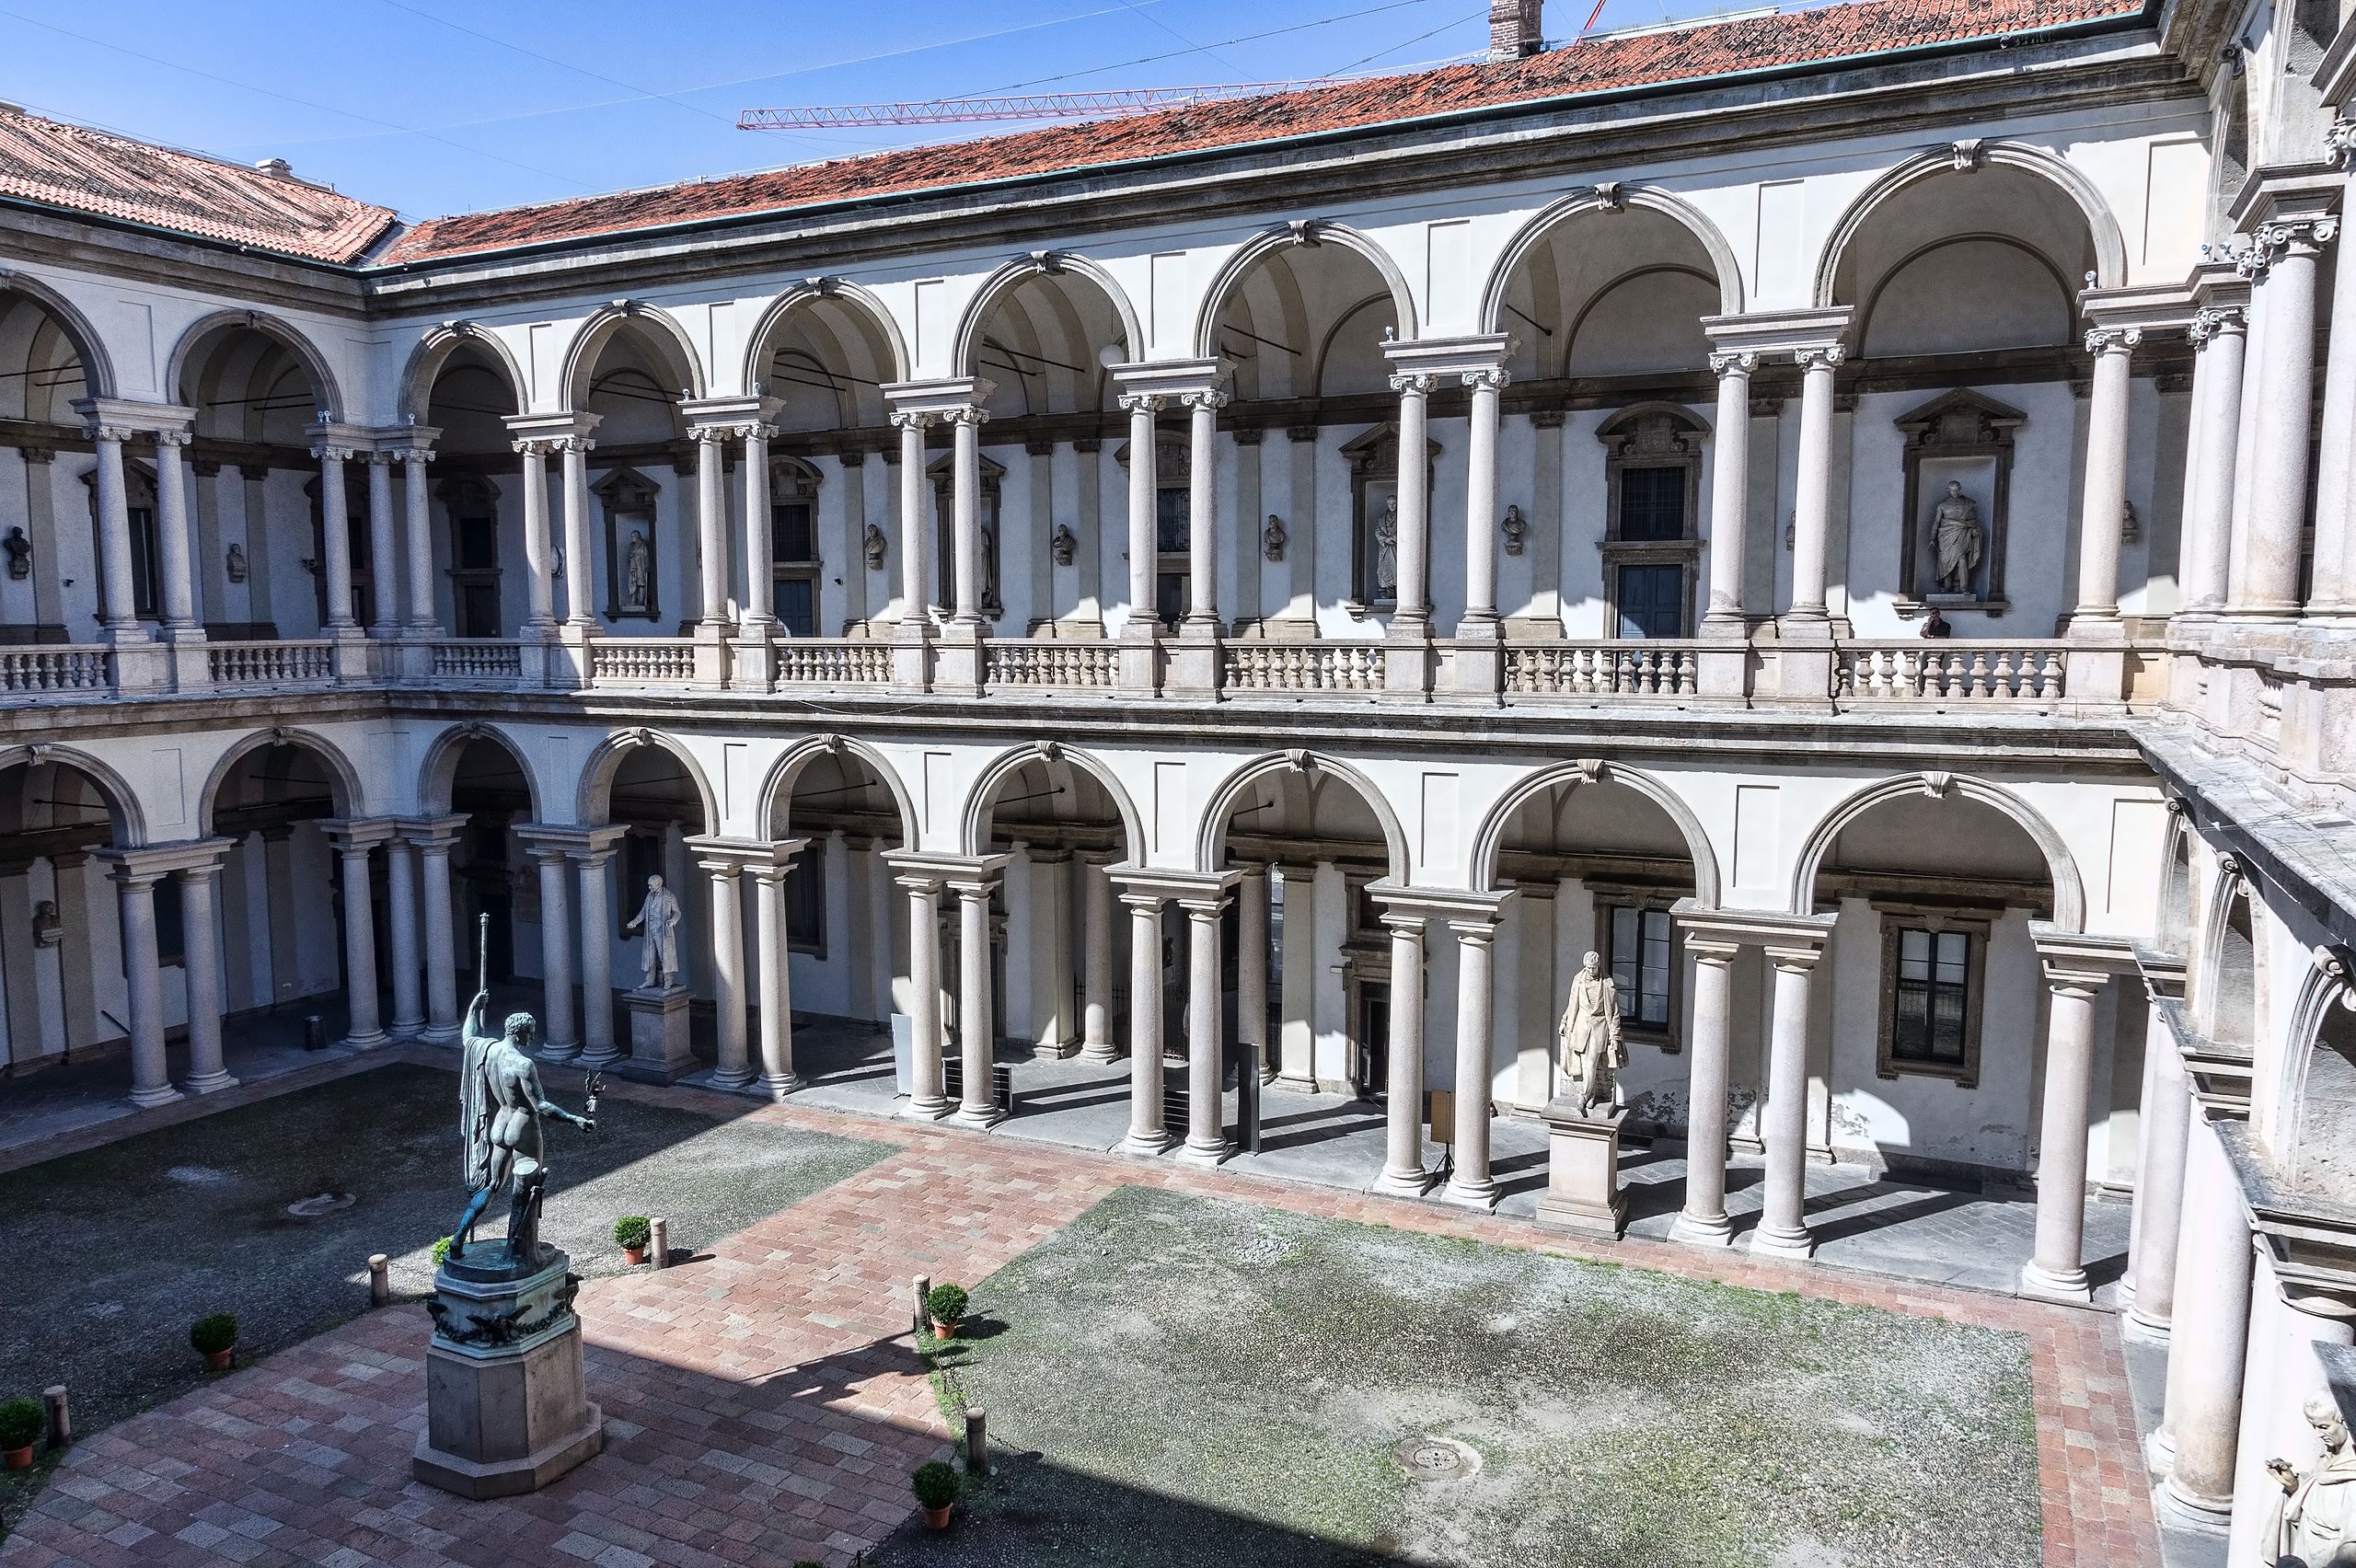 File:Milan - Pinacothèque de Brera - Cour intérieure.jpg - Wikipedia